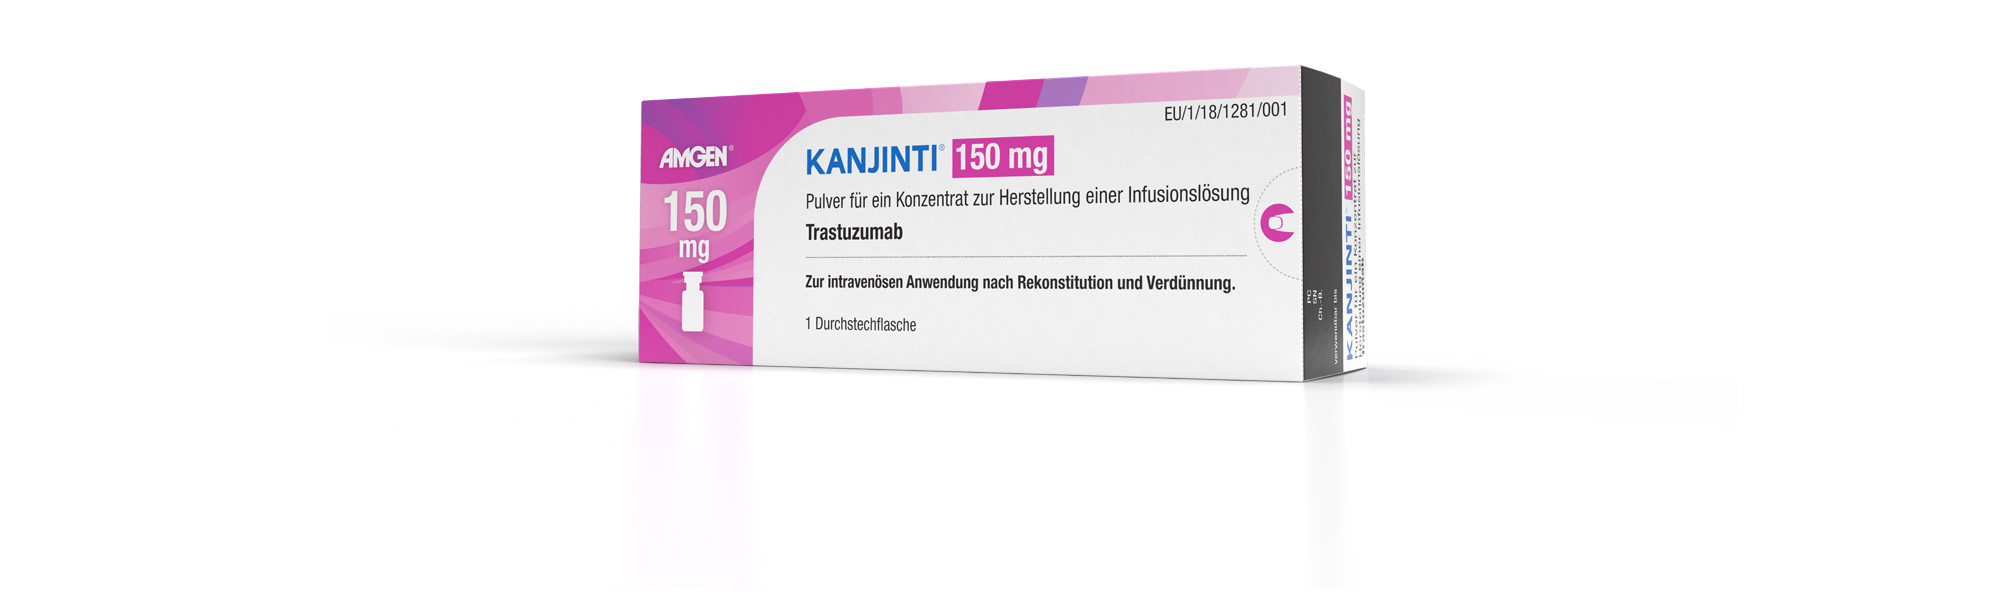 KANJINTI (Trastuzumab)